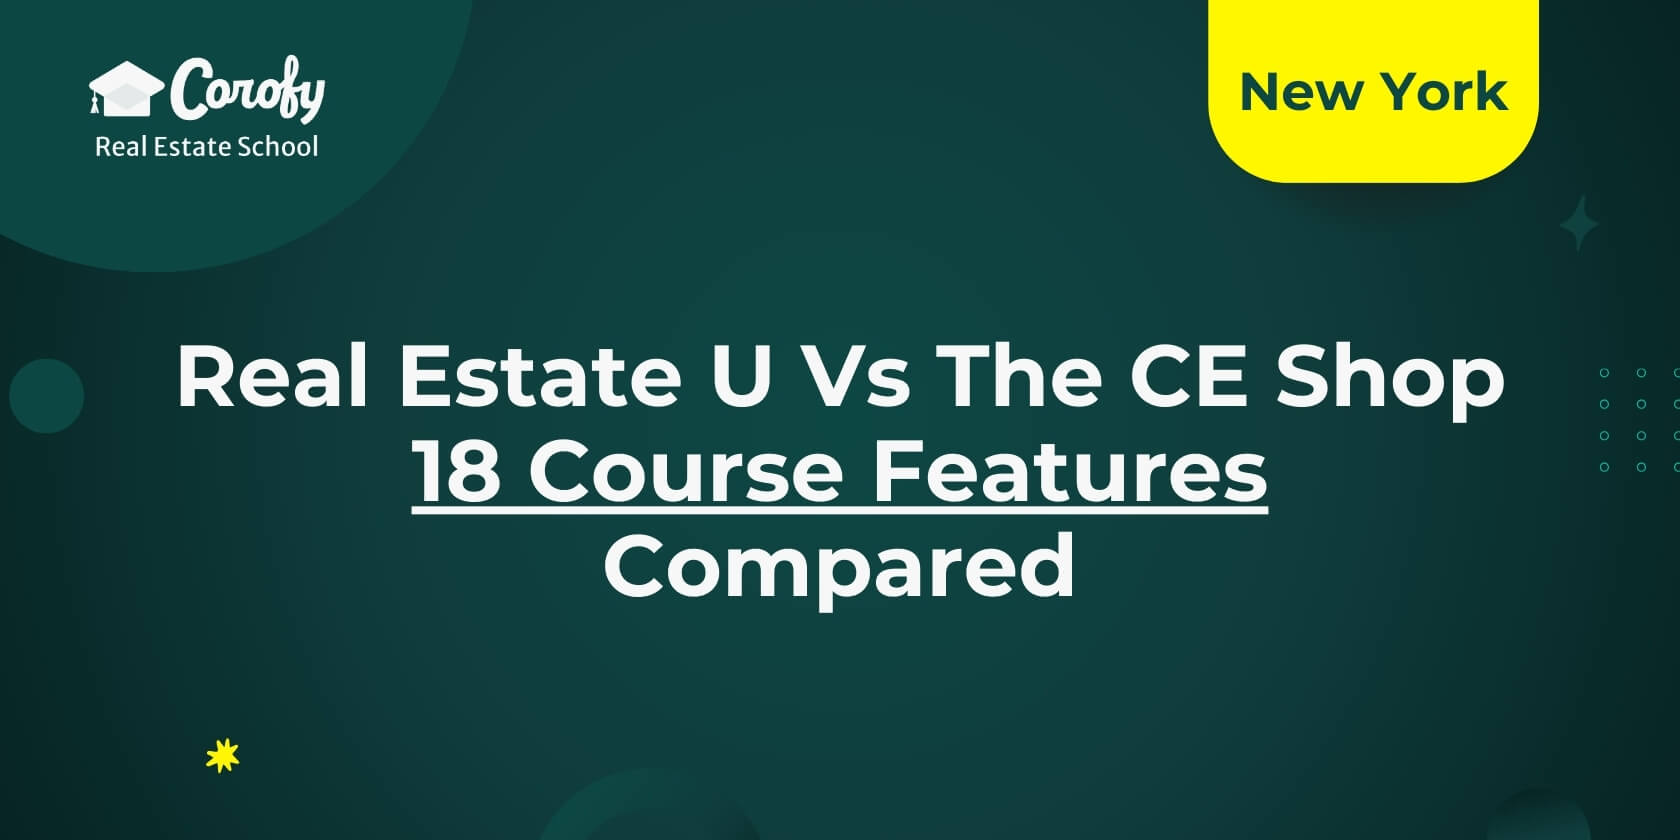 Real Estate U vs The CE Shop - 18 Course Features Compared